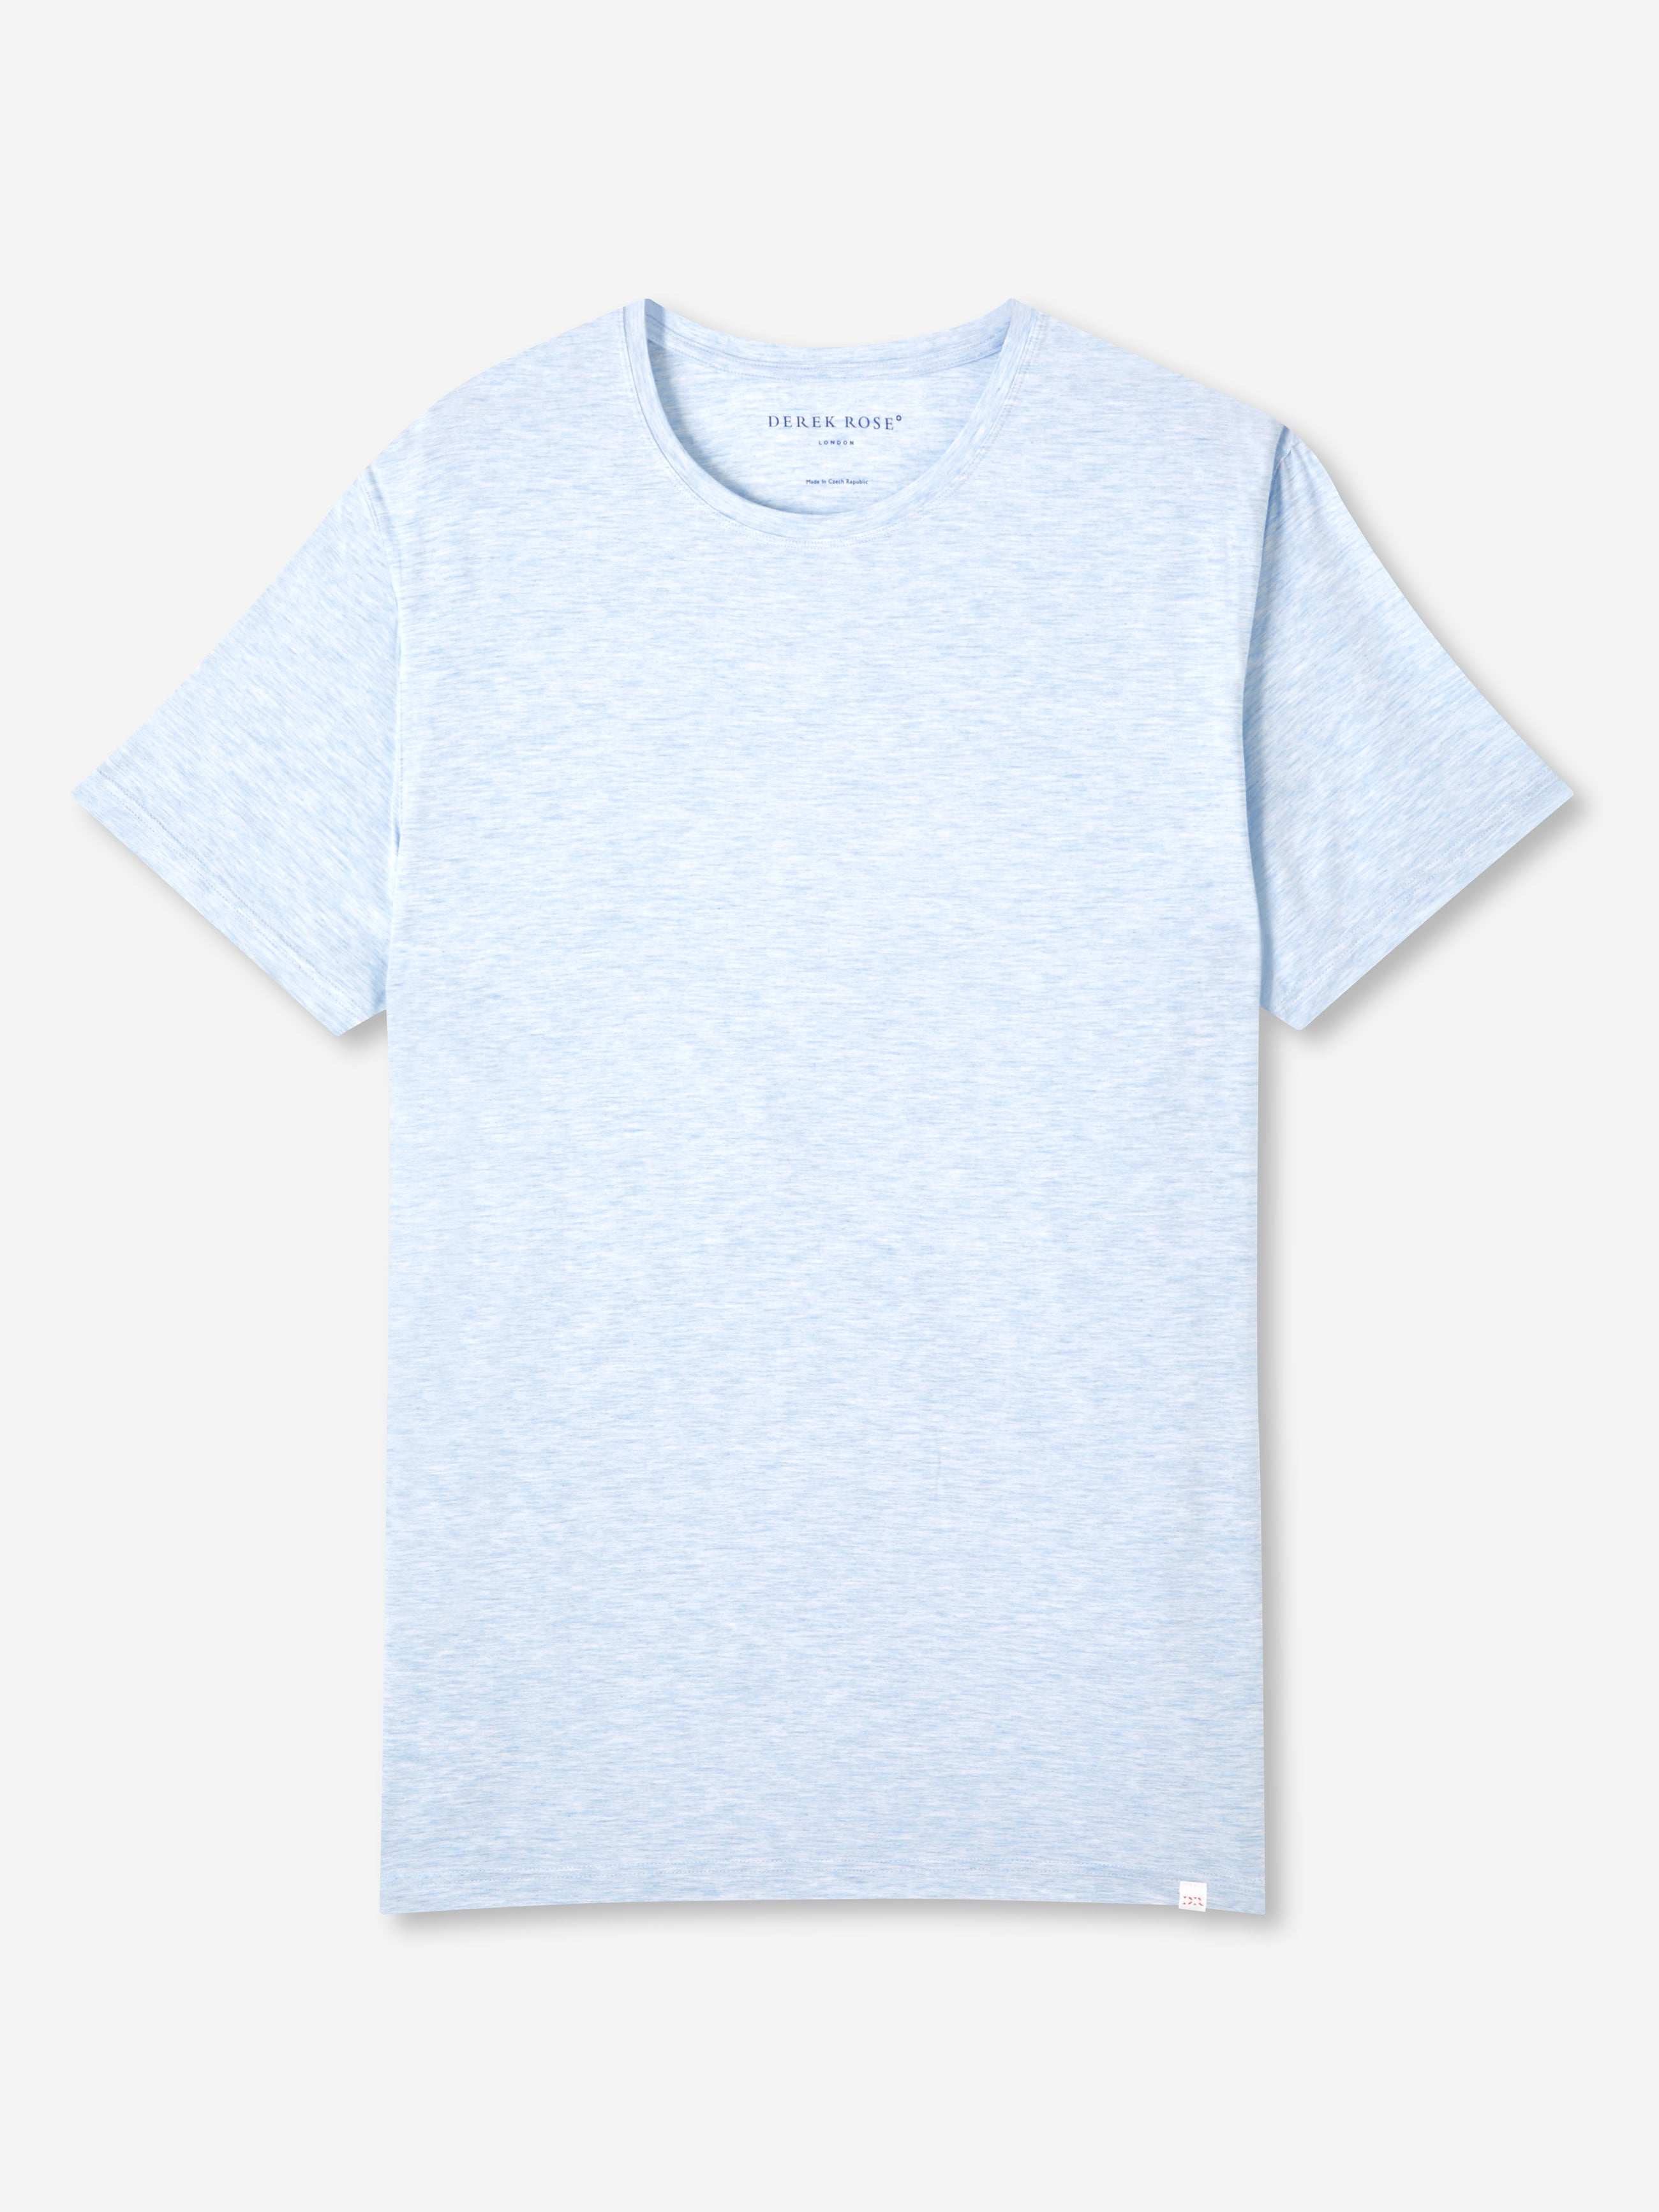 Men's T-Shirt Ethan Micro Modal Stretch Light Blue Heather